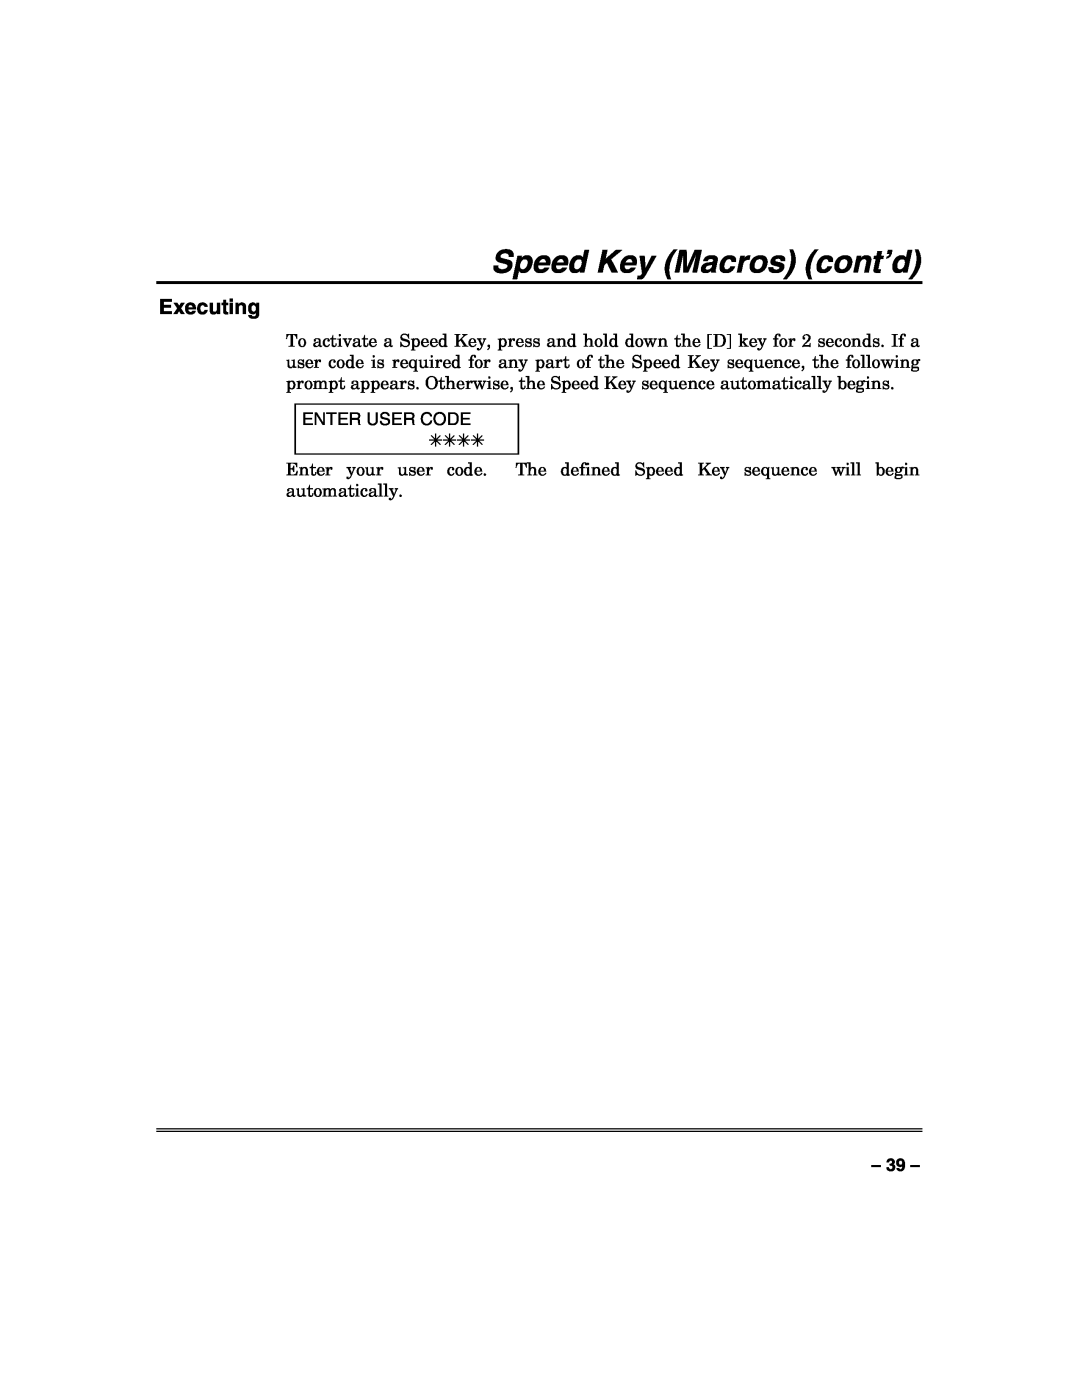 Honeywell VISTA-50PUL manual Speed Key Macros cont’d, Executing 